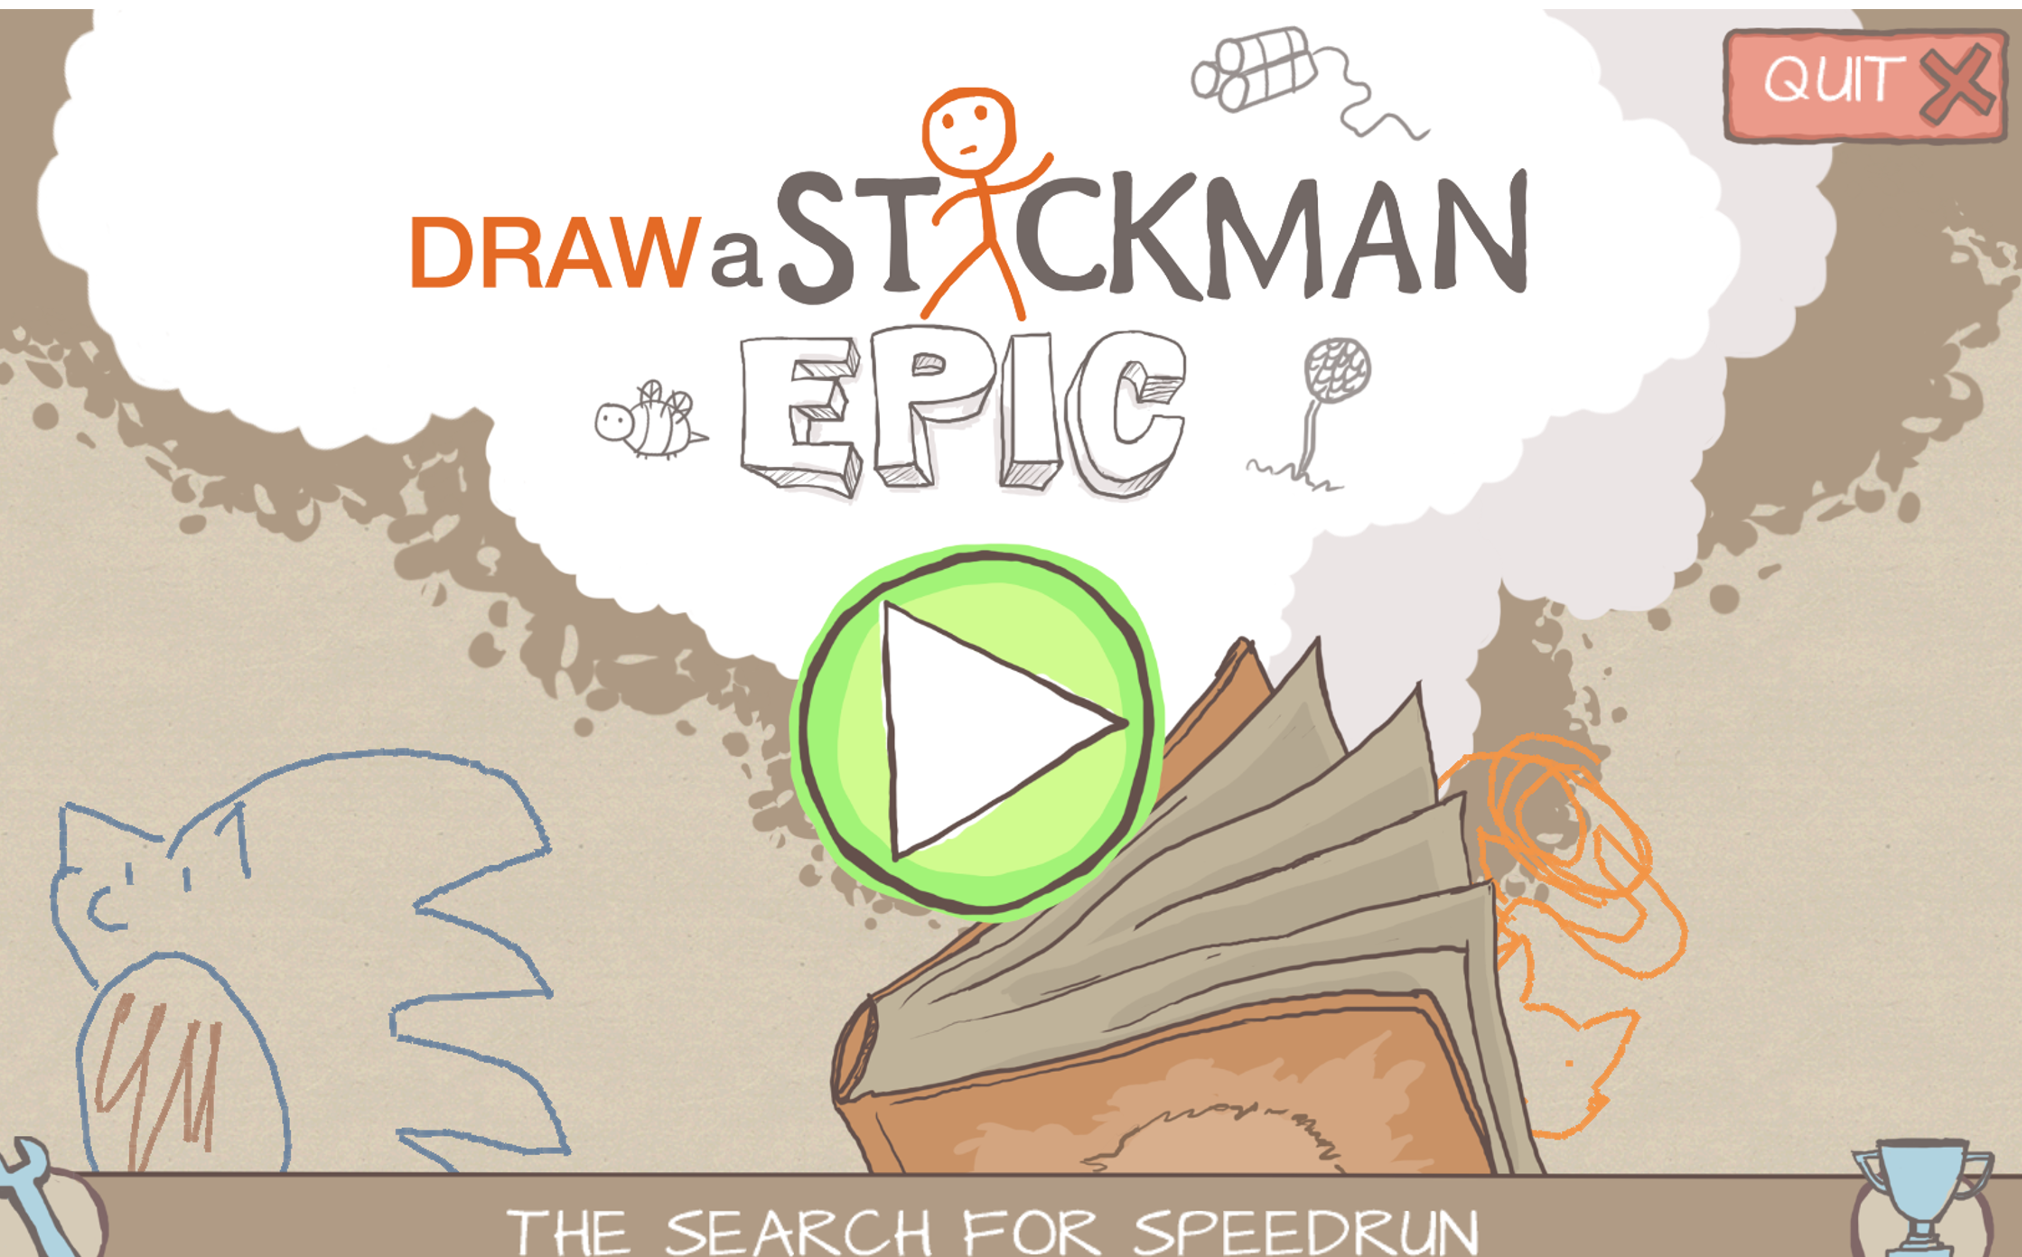 Draw a Stickman: Epic 3 - Speedrun